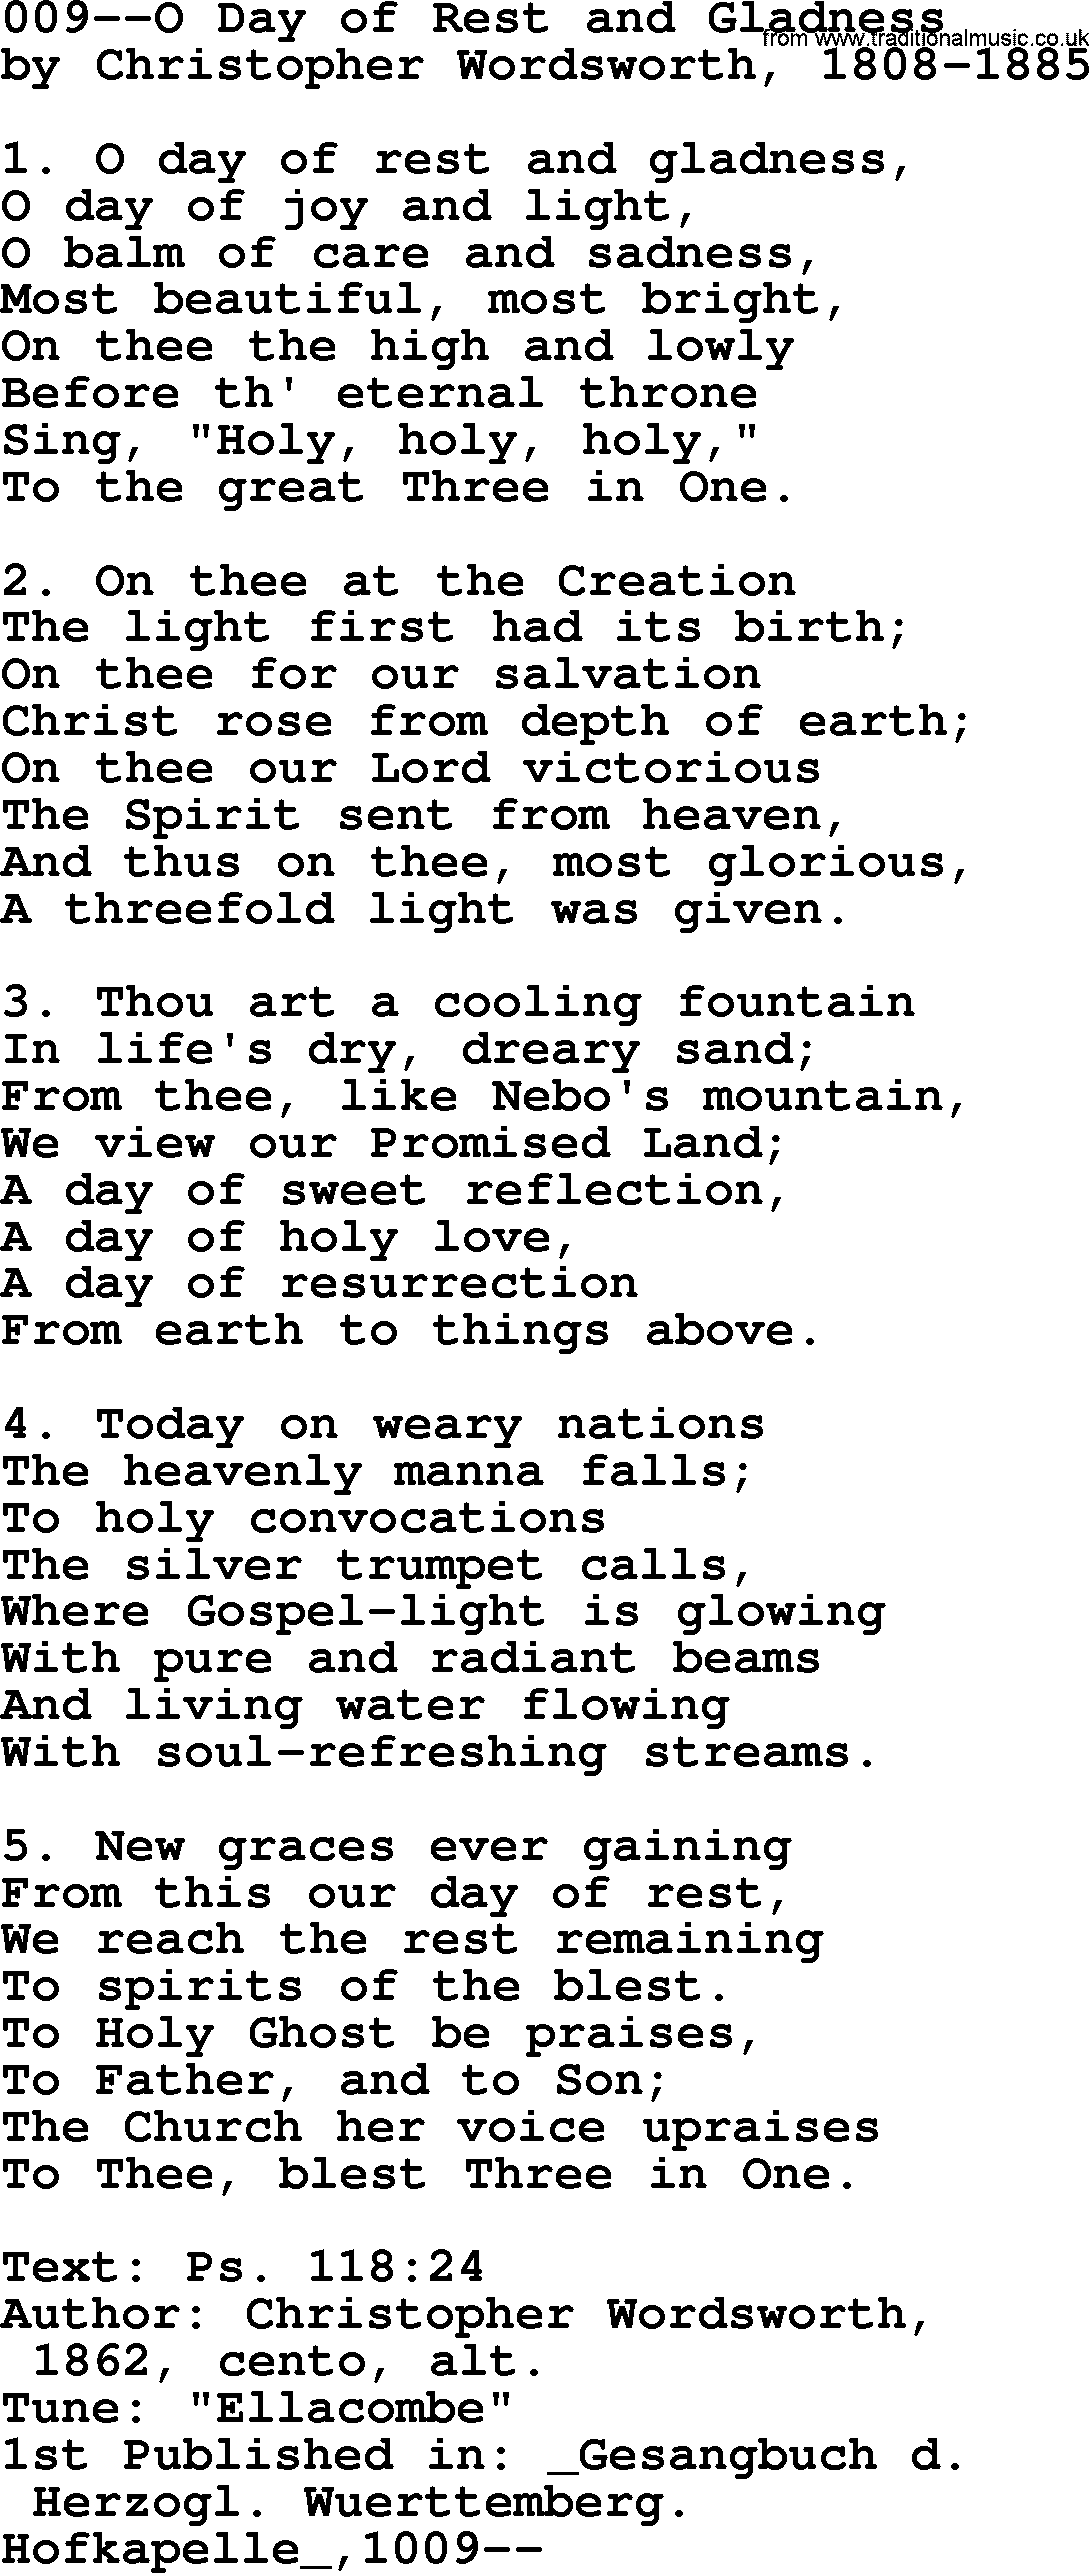 Lutheran Hymn: 009--O Day of Rest and Gladness.txt lyrics with PDF